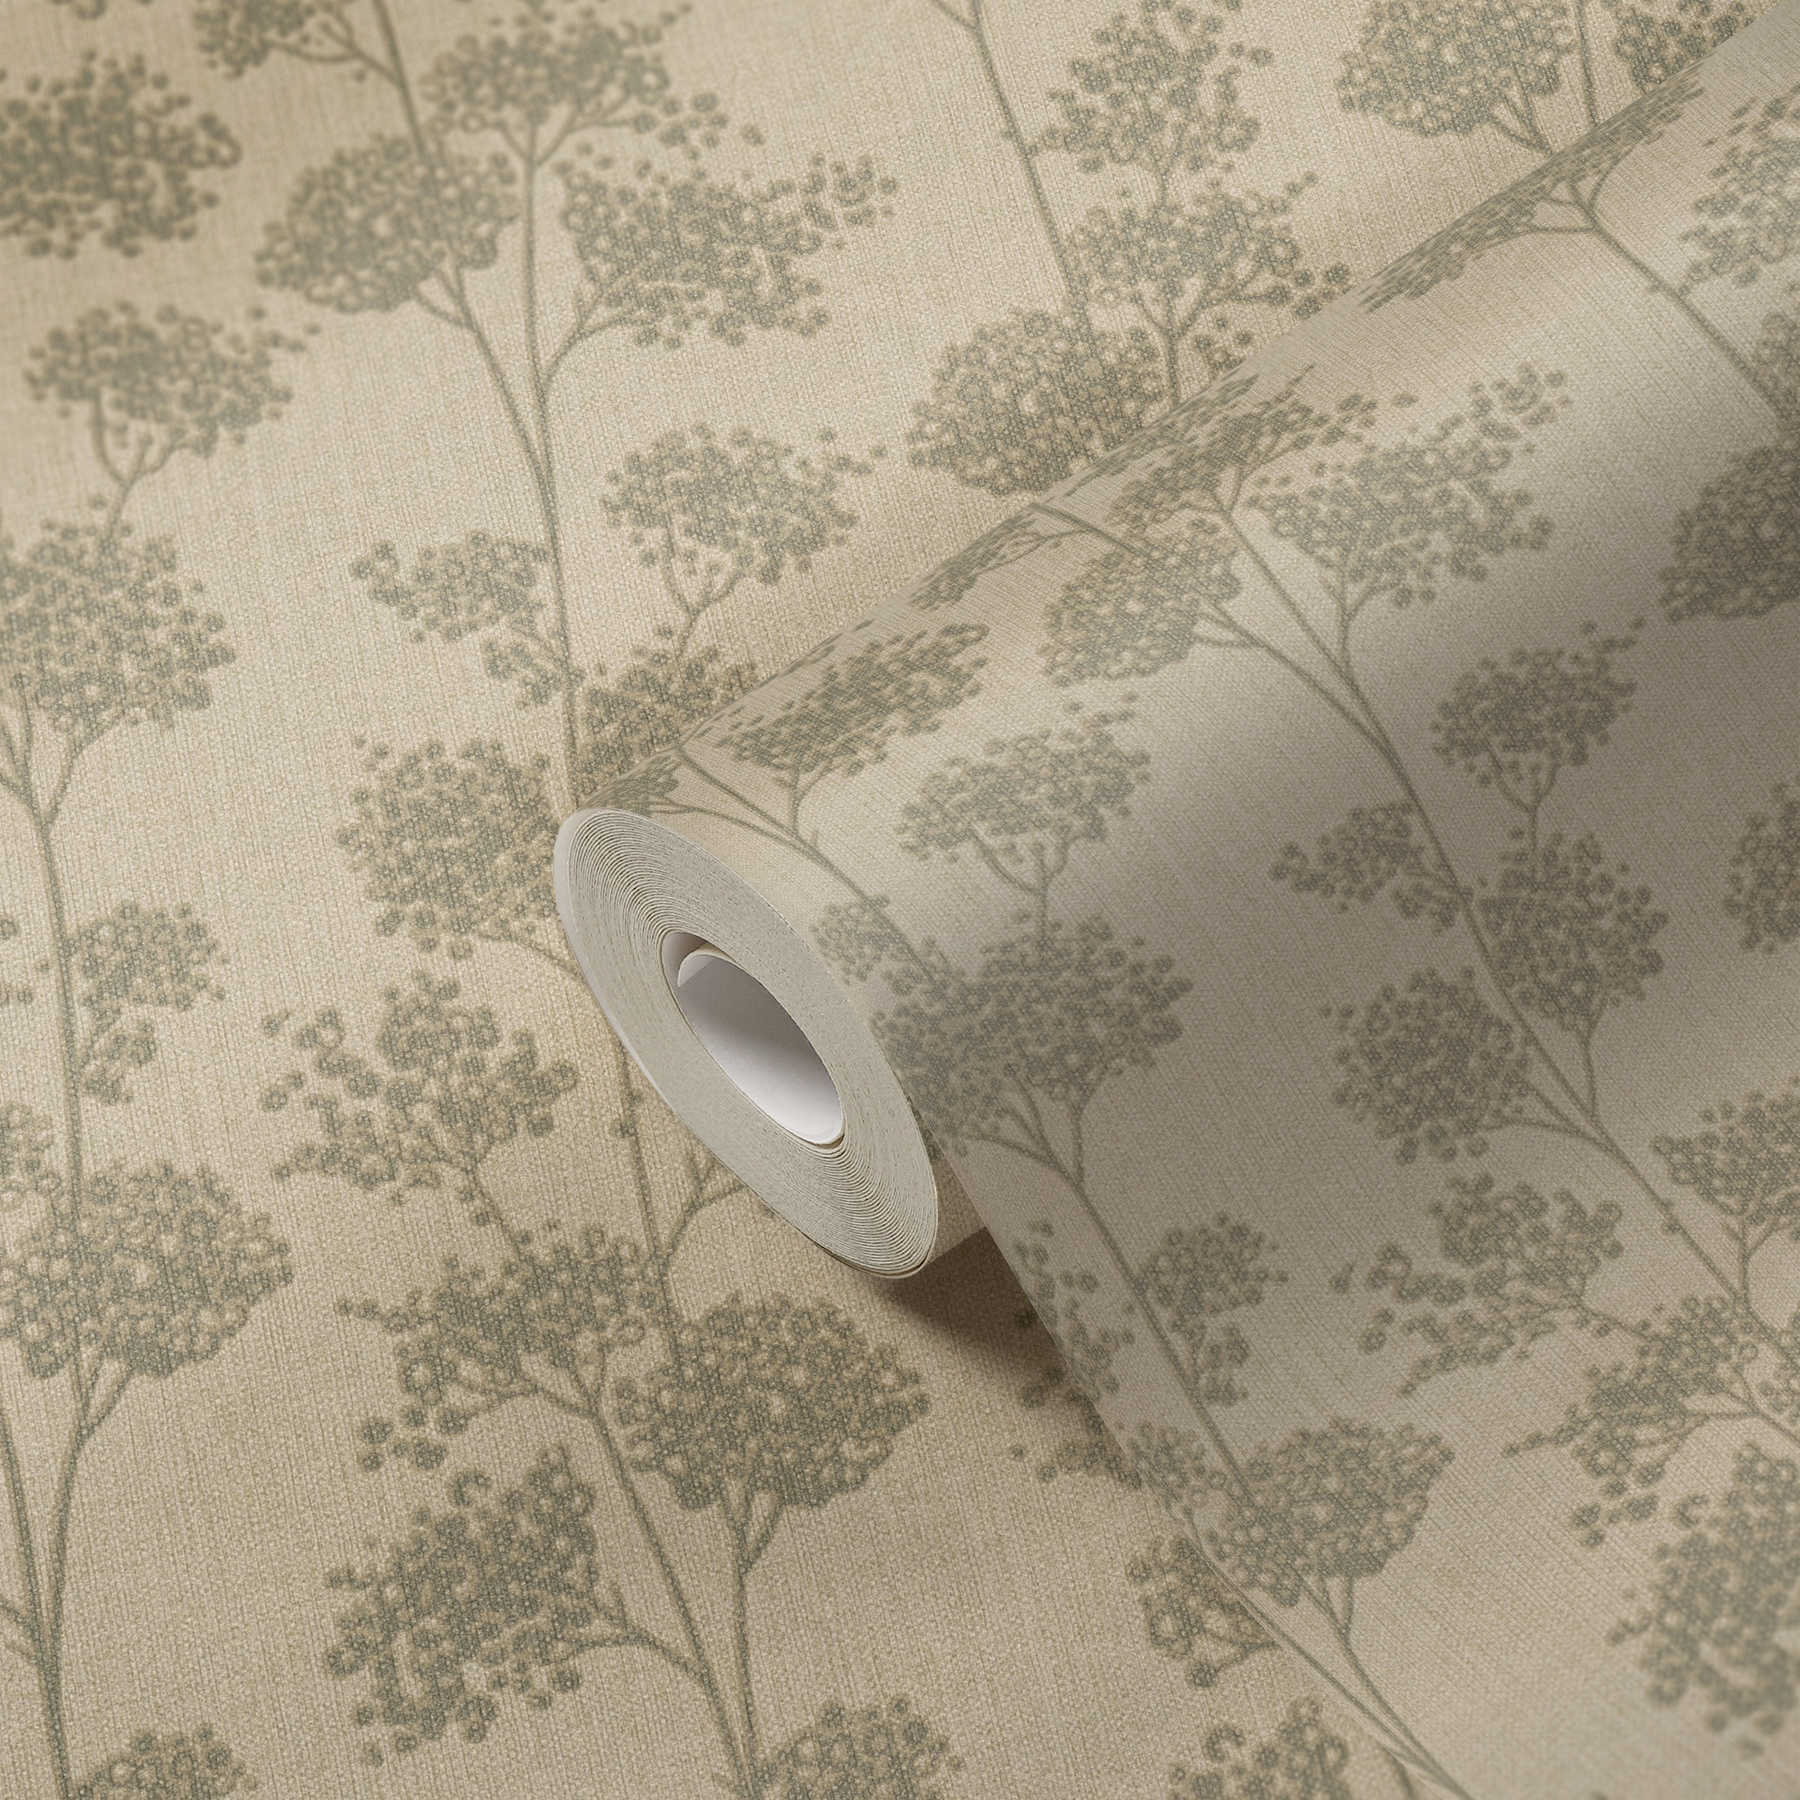             Linen optics wallpaper country style & nature motif - beige
        